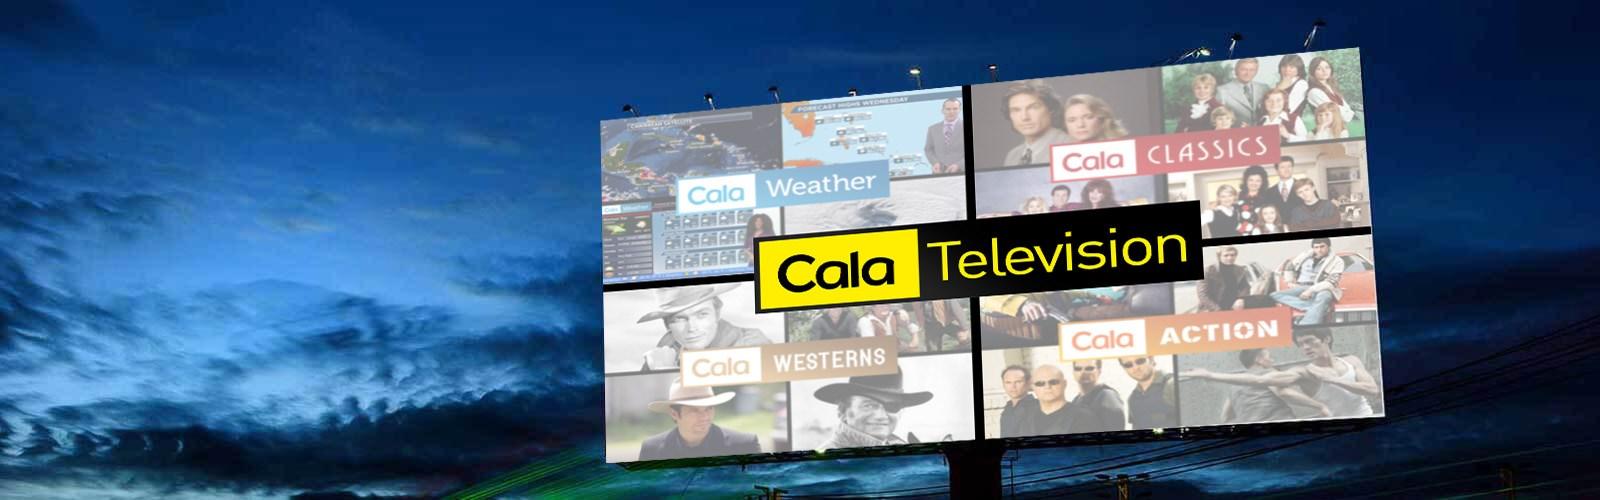 Billboard with CalaTV